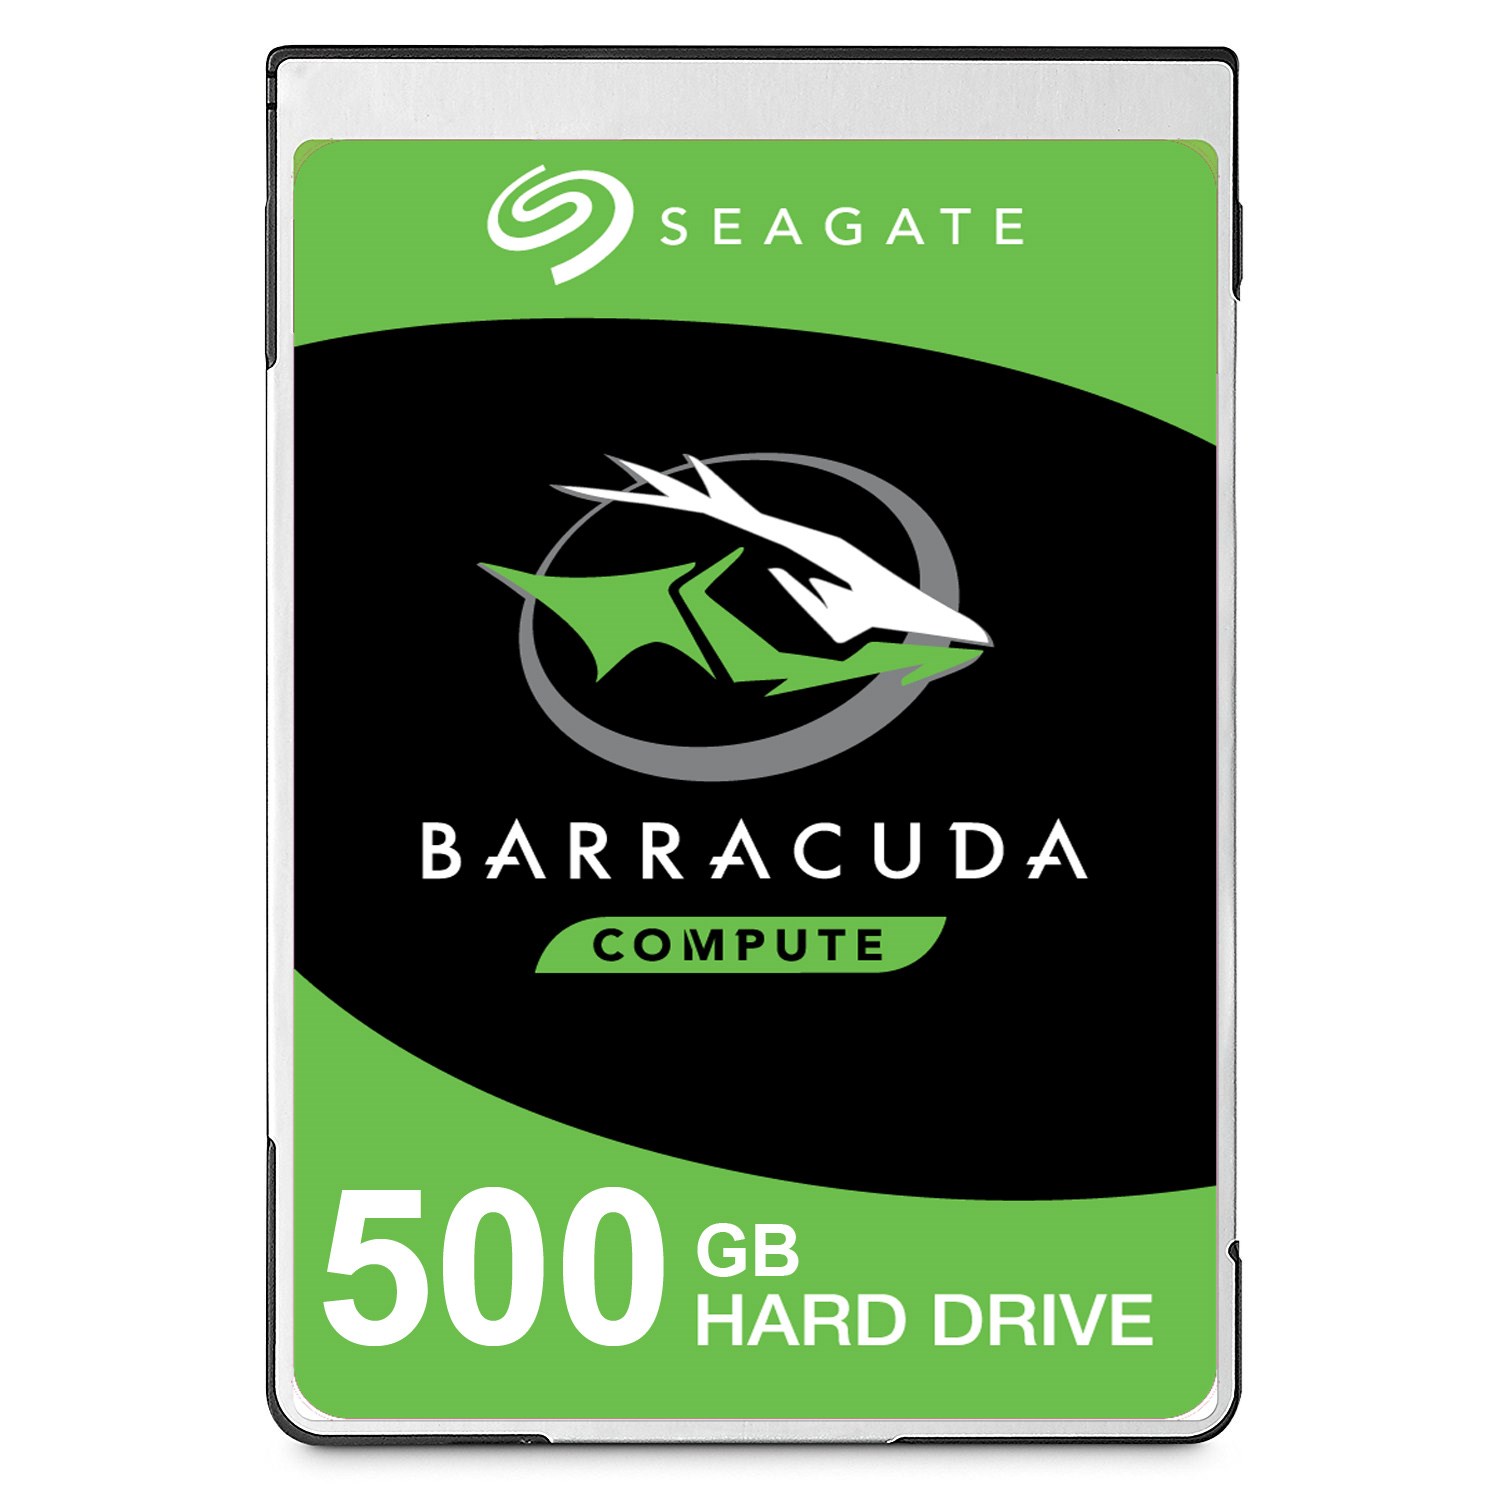 SEAGATE BARRACUDA 500GB 5400 RPM 128MB SATA3 6Gbit/sn ST500LM030 BULK NOTEBOOK HDD